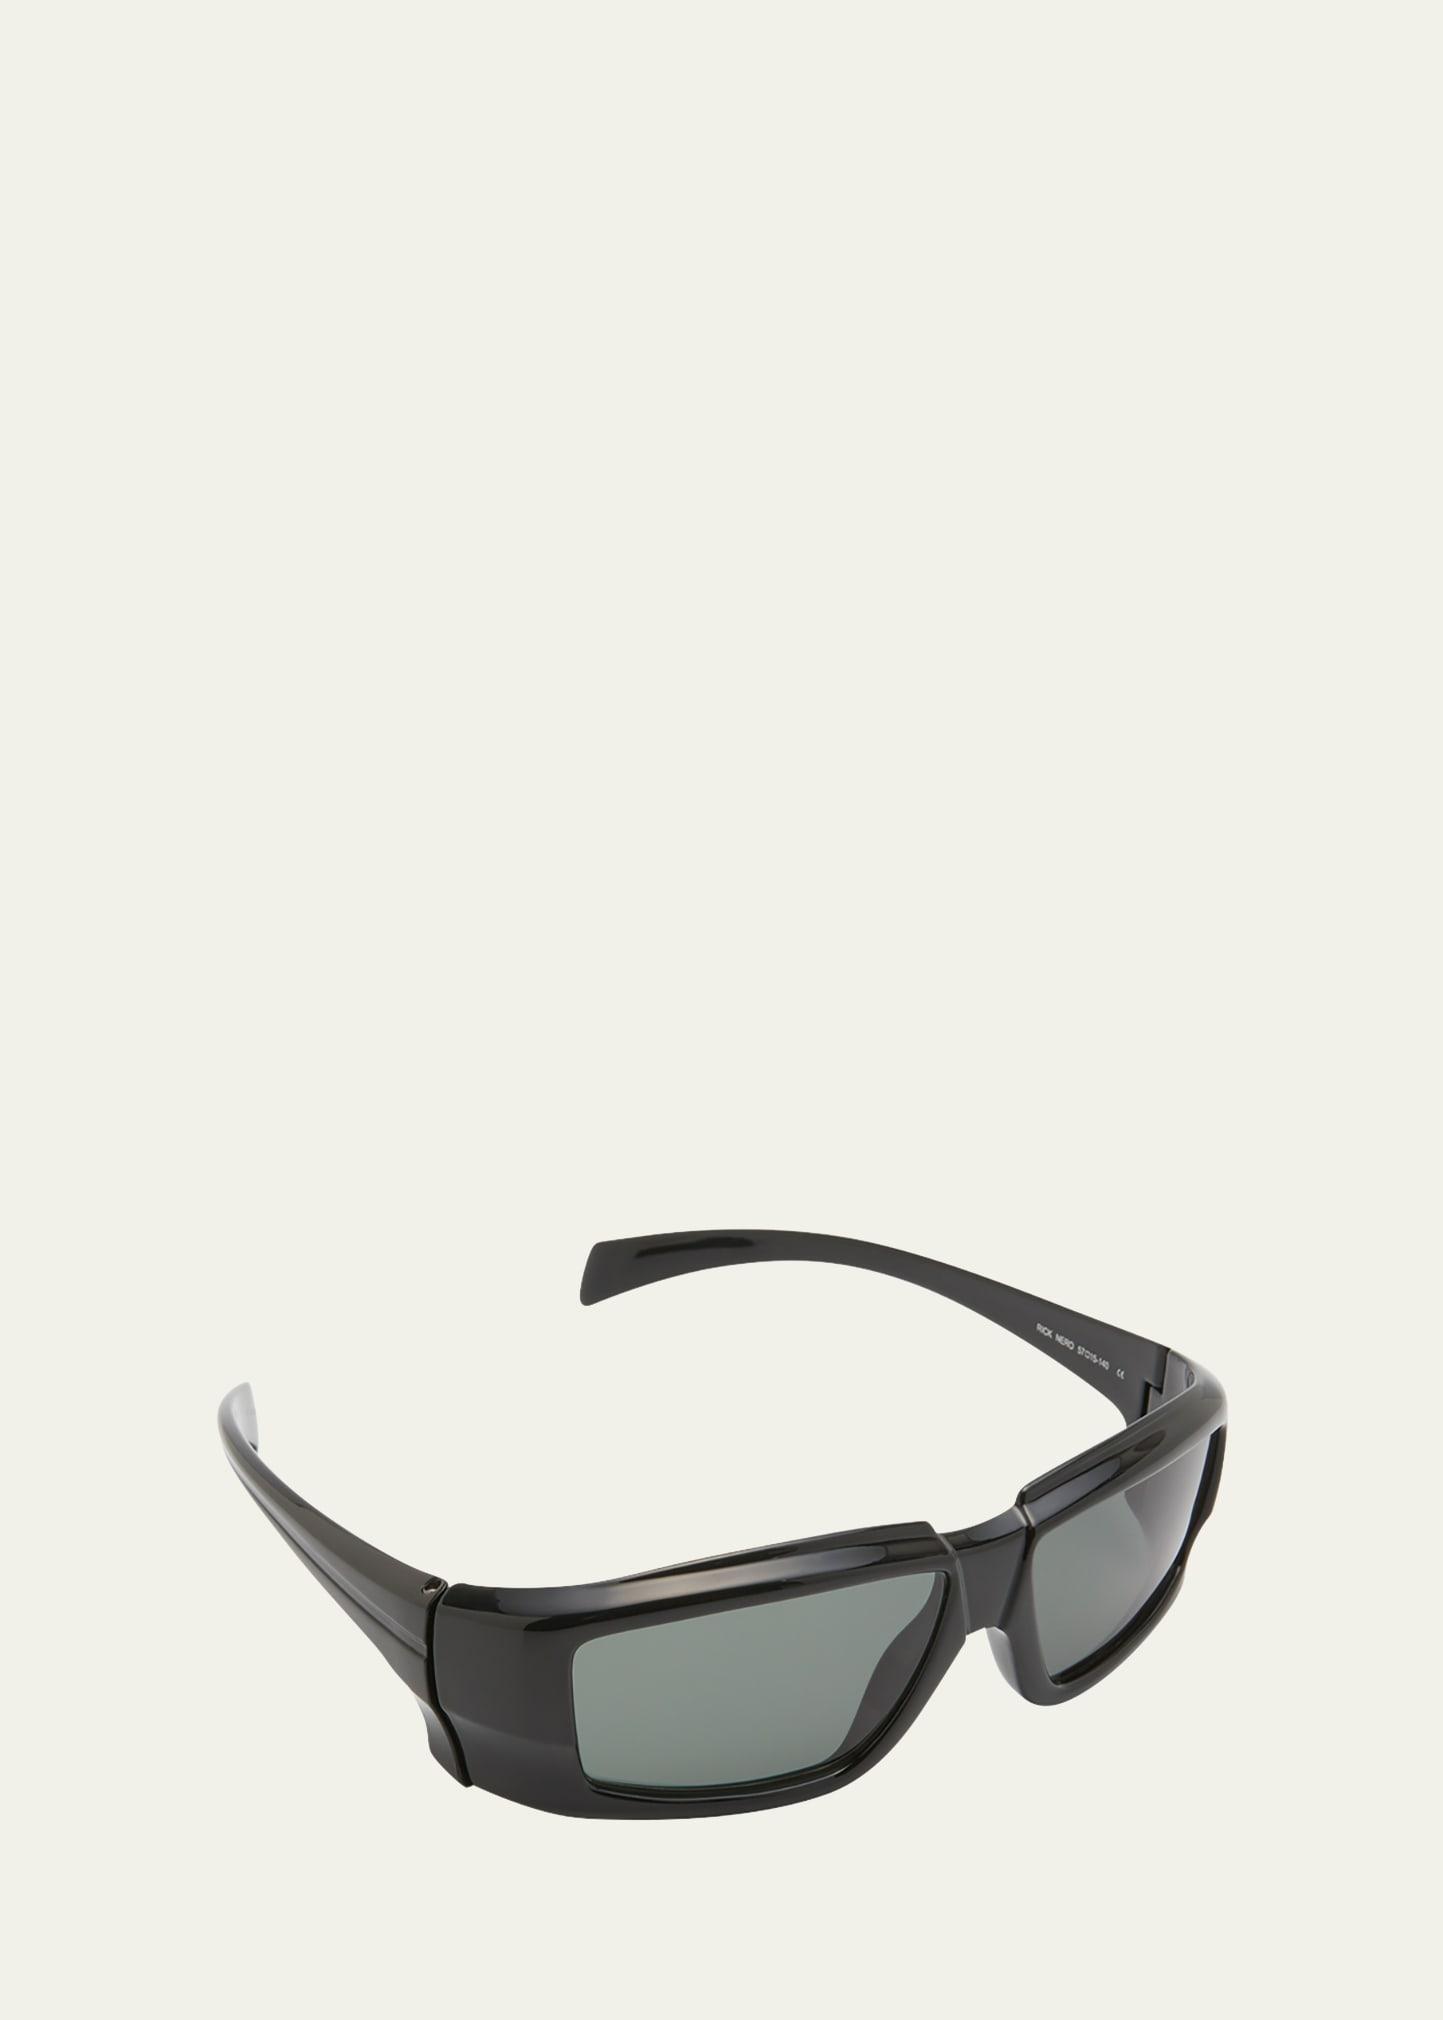 Mens 55MM Mirrored Rectangular Sunglasses Product Image